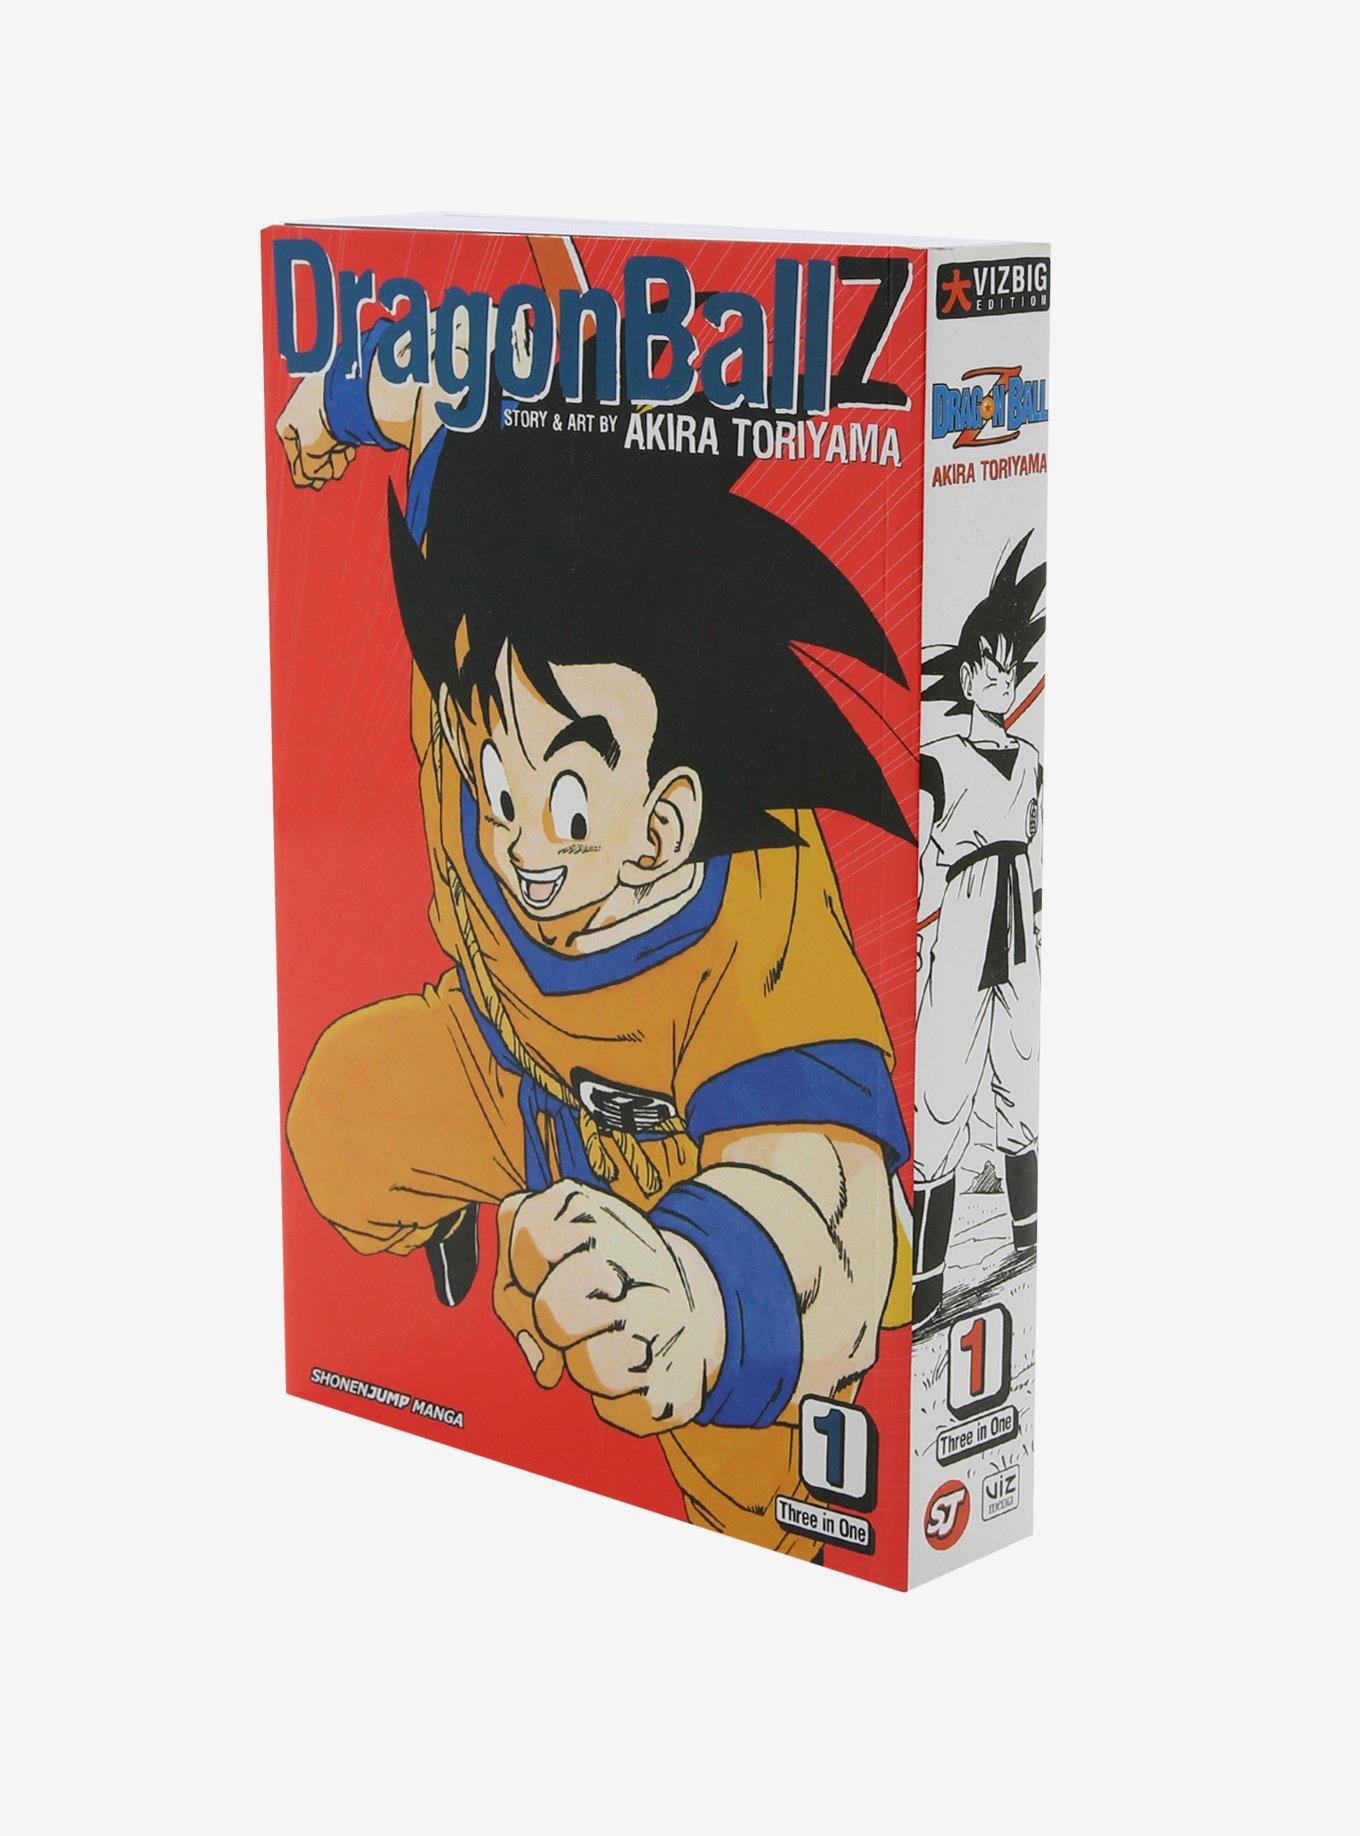 Dragon Ball Z VIZBIG Three-in-One, Vol. 4 by Akira Toriyama, Paperback